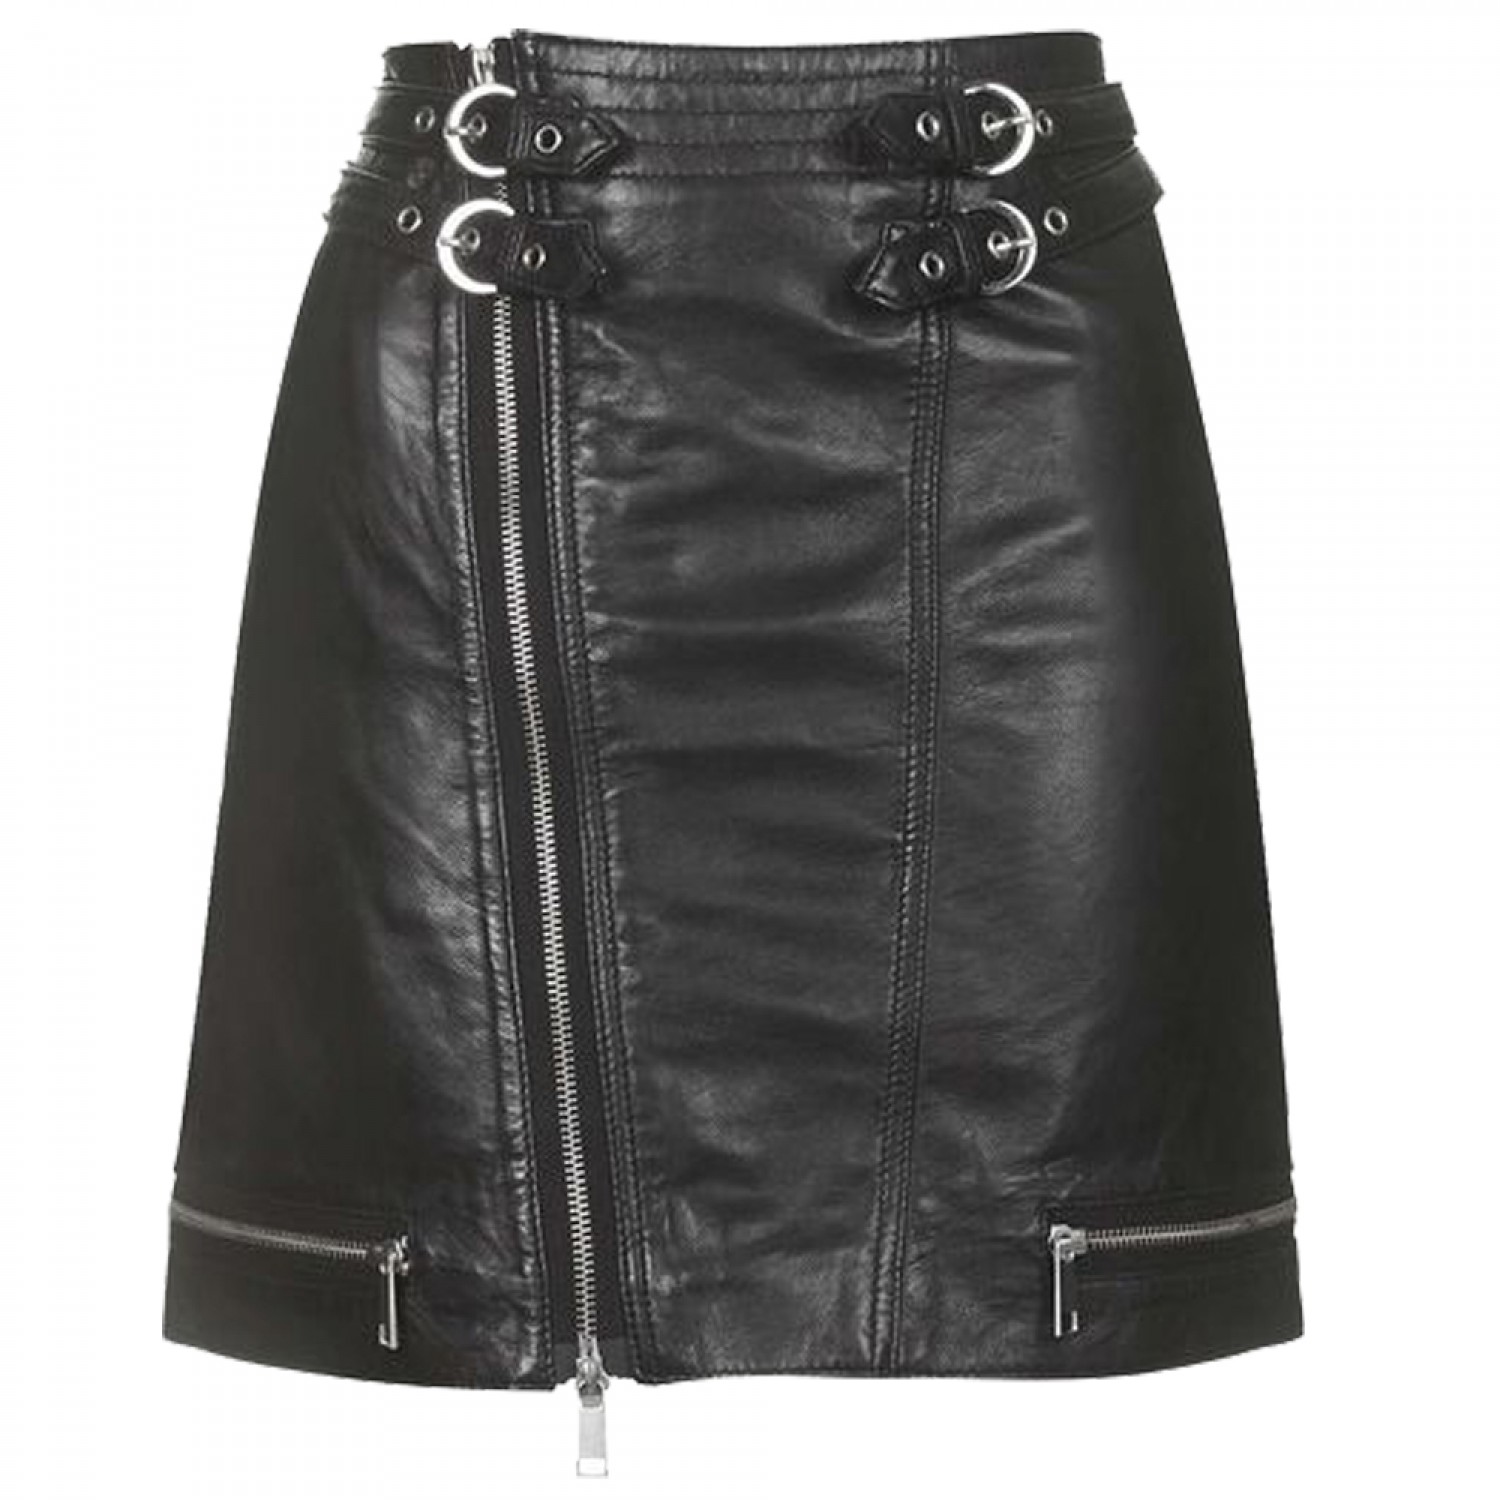 Ladies Black Genuine Leather Skirt Women Gothic Clothing